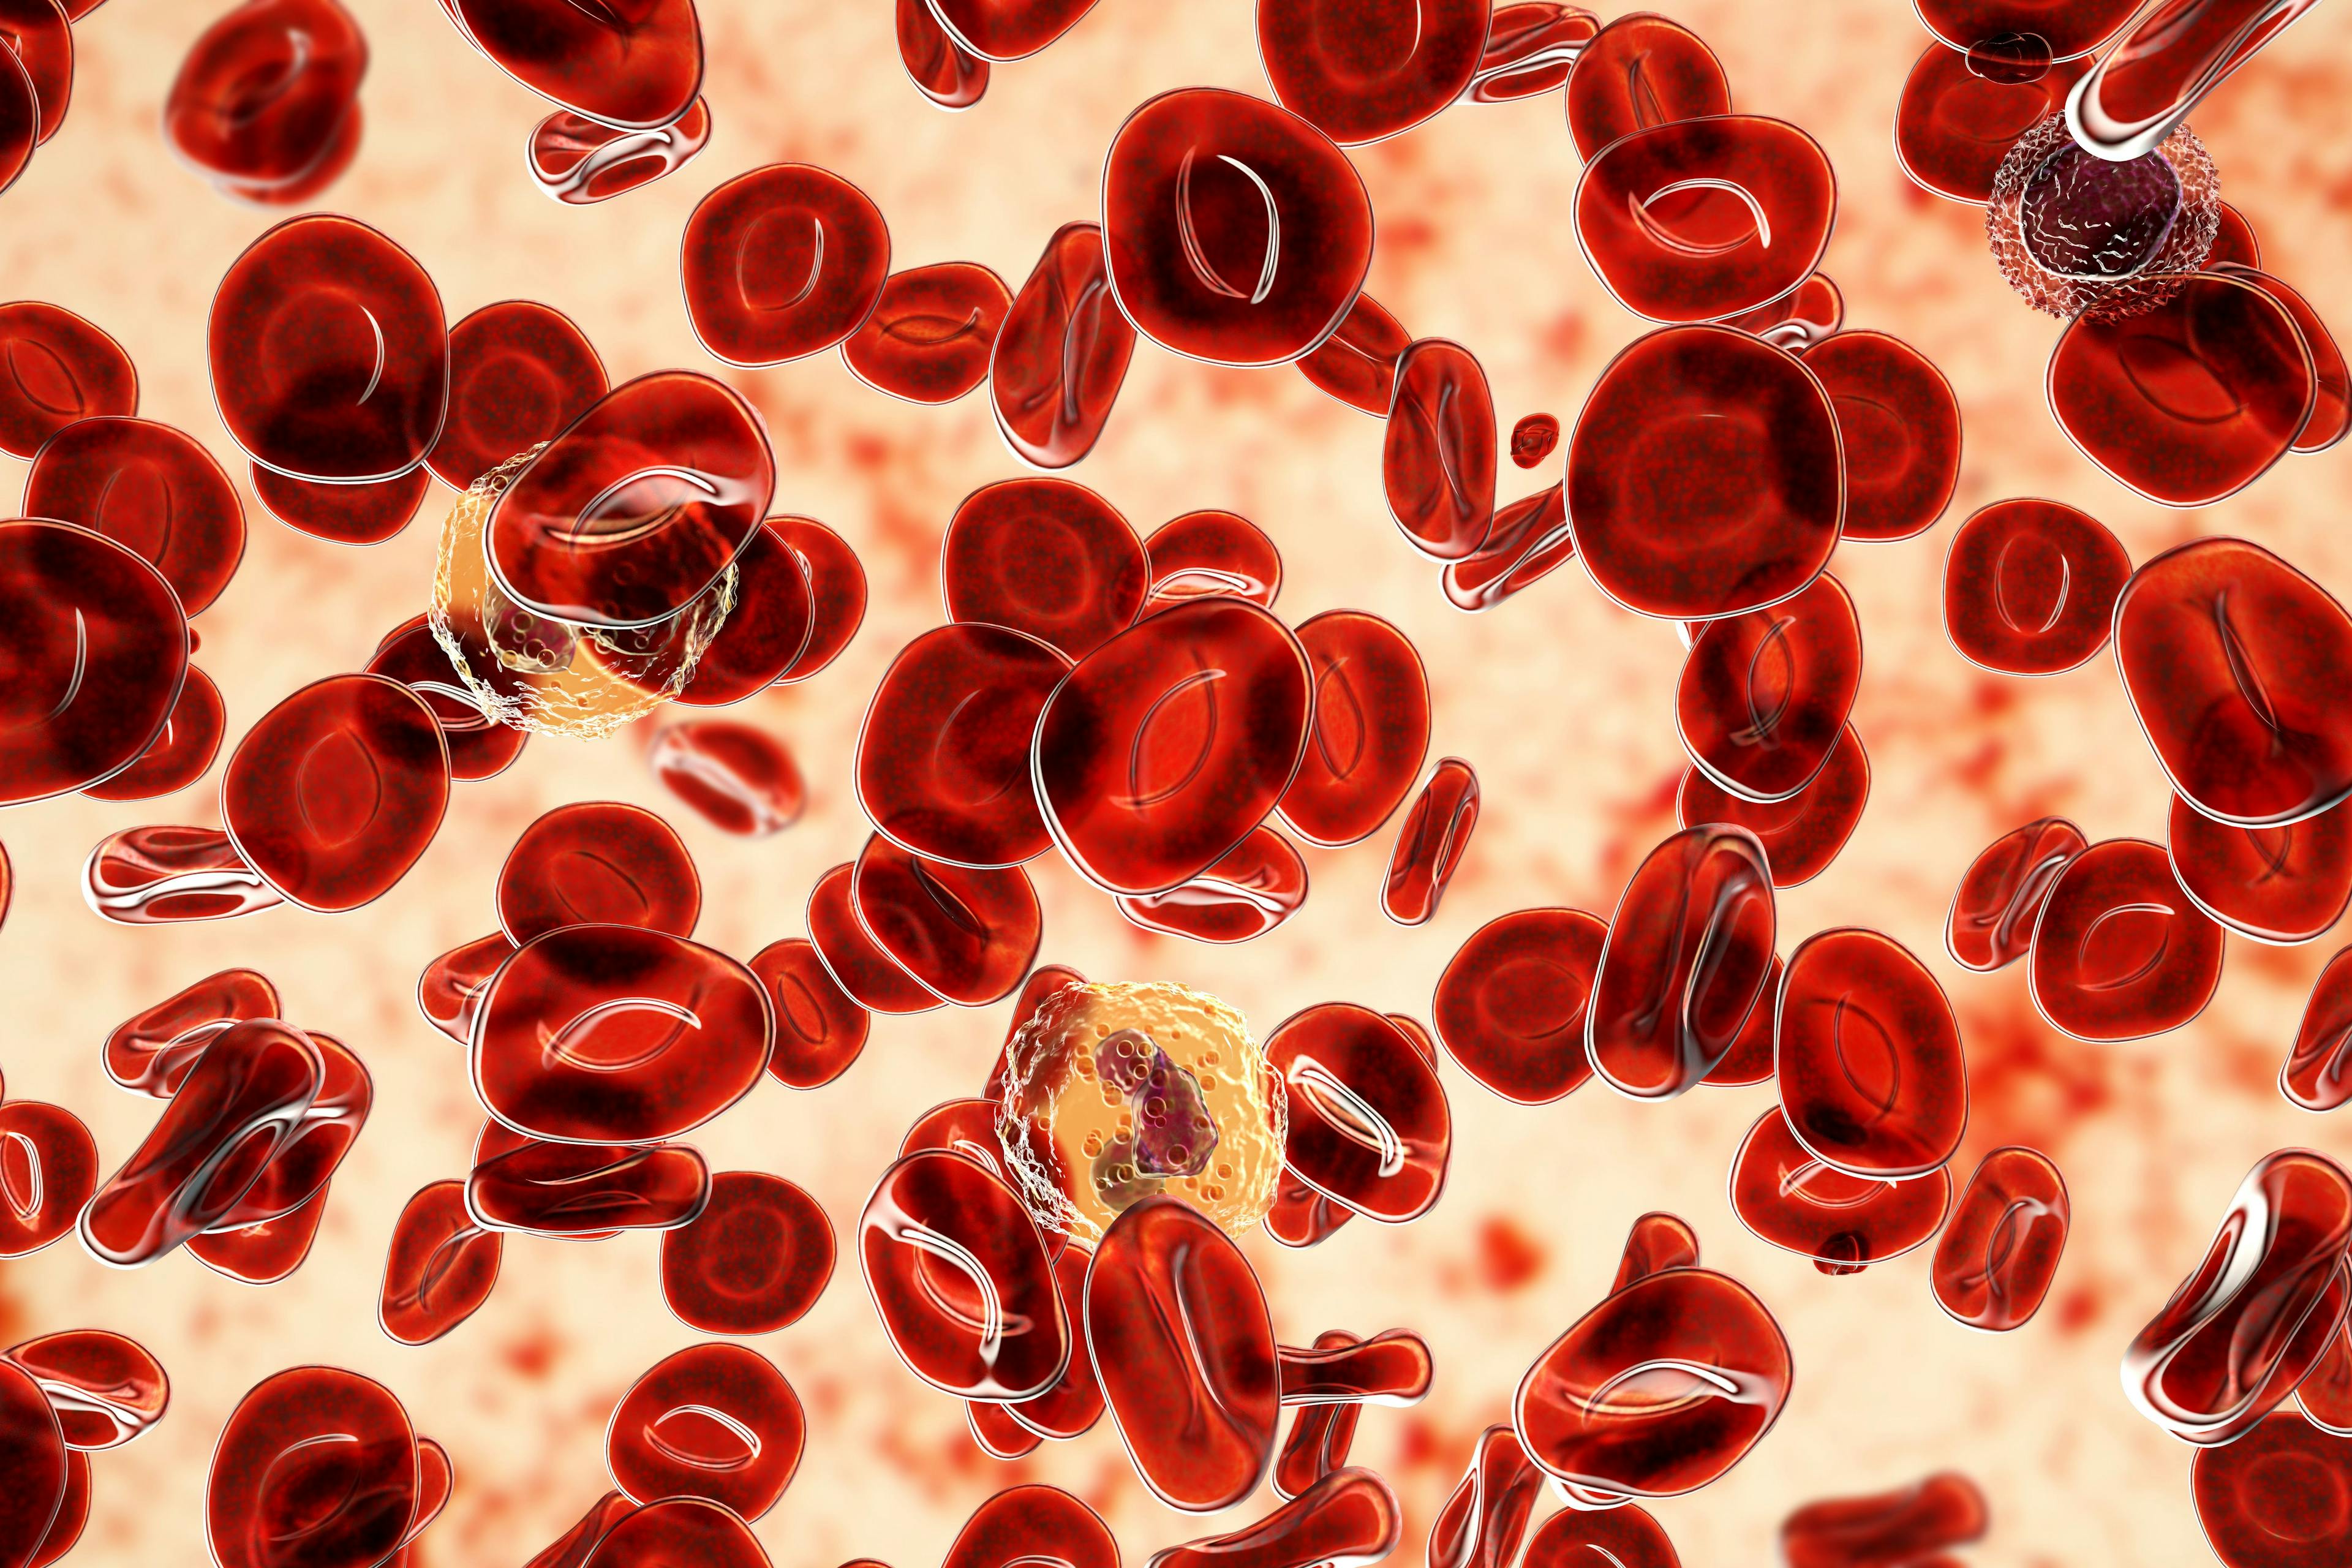 Polycythemia vera blood cells | Image credit: Dr_Microbe - stock.adobe.com